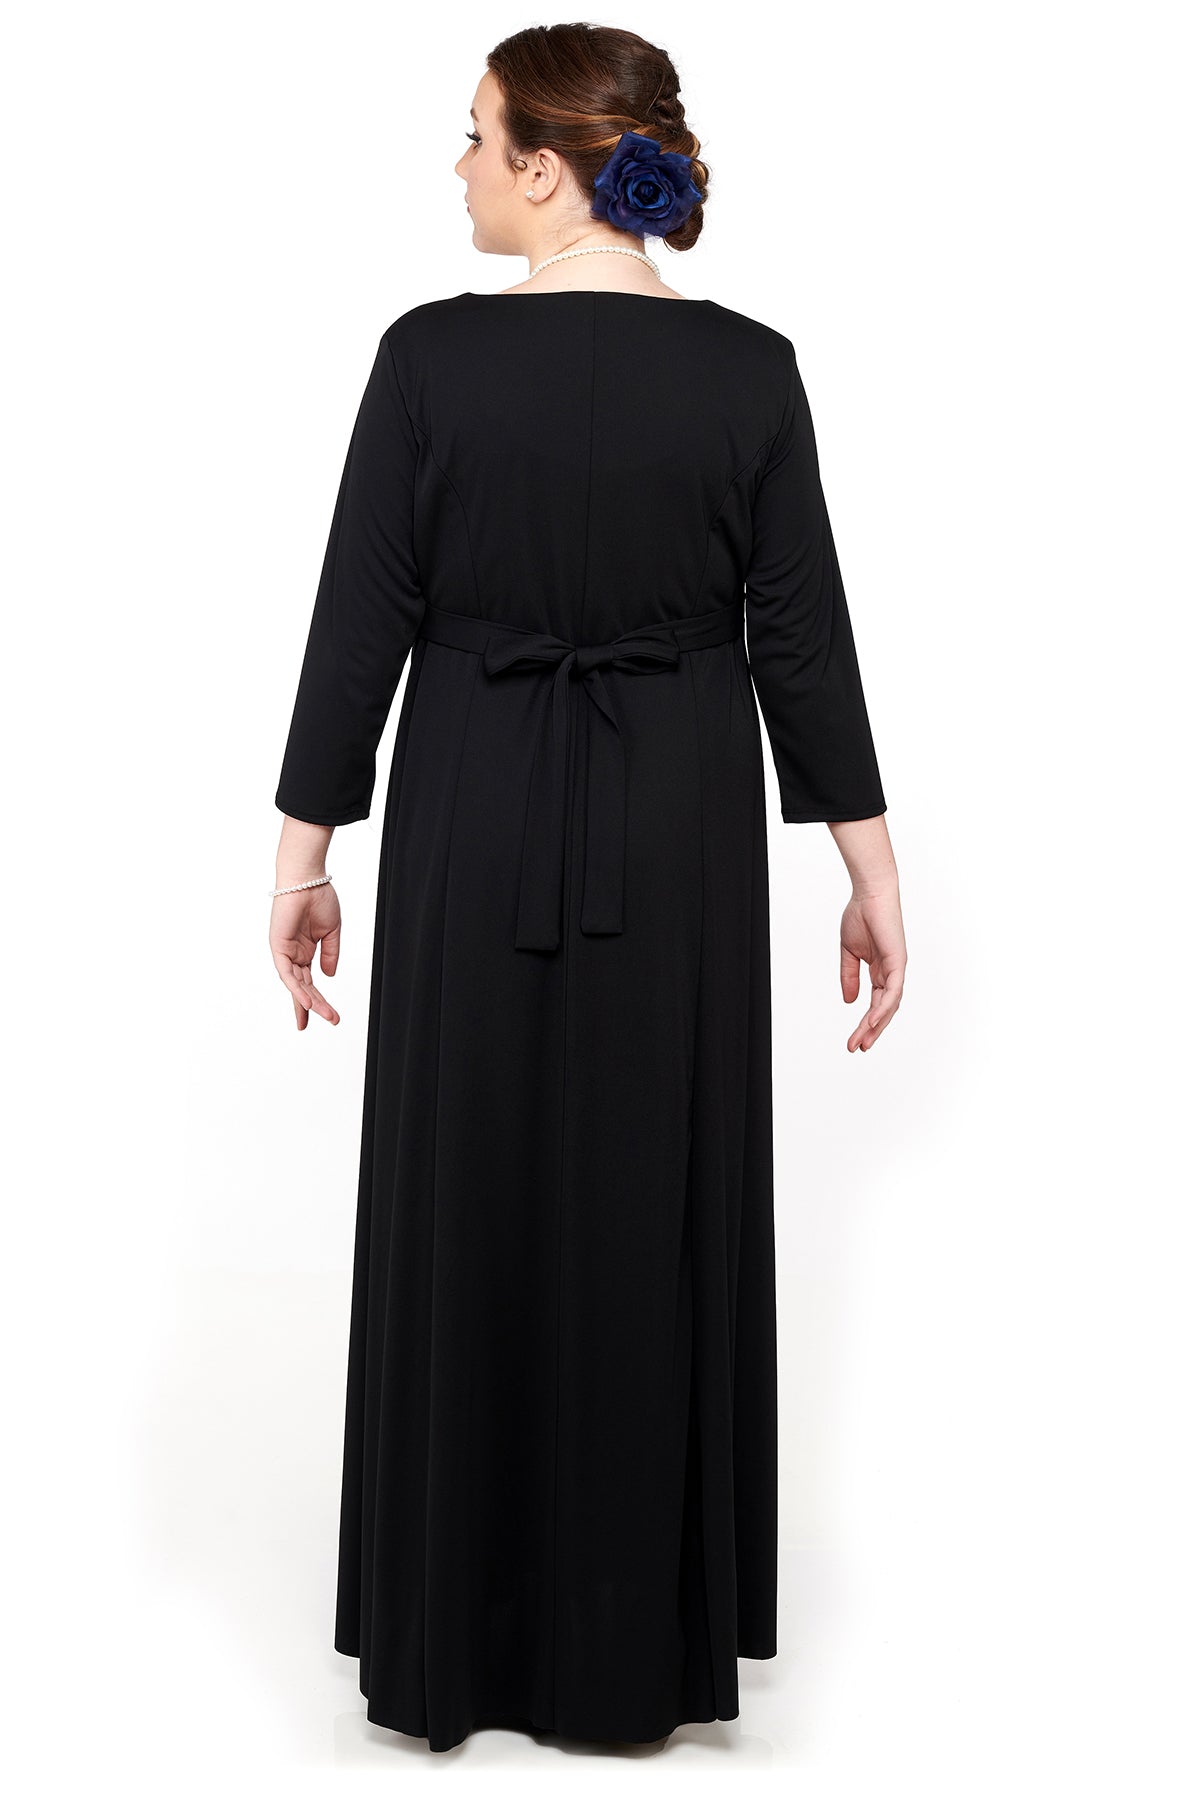 NATALIE (Style #125) - Scoop Neckline 3/4 Sleeve Dress